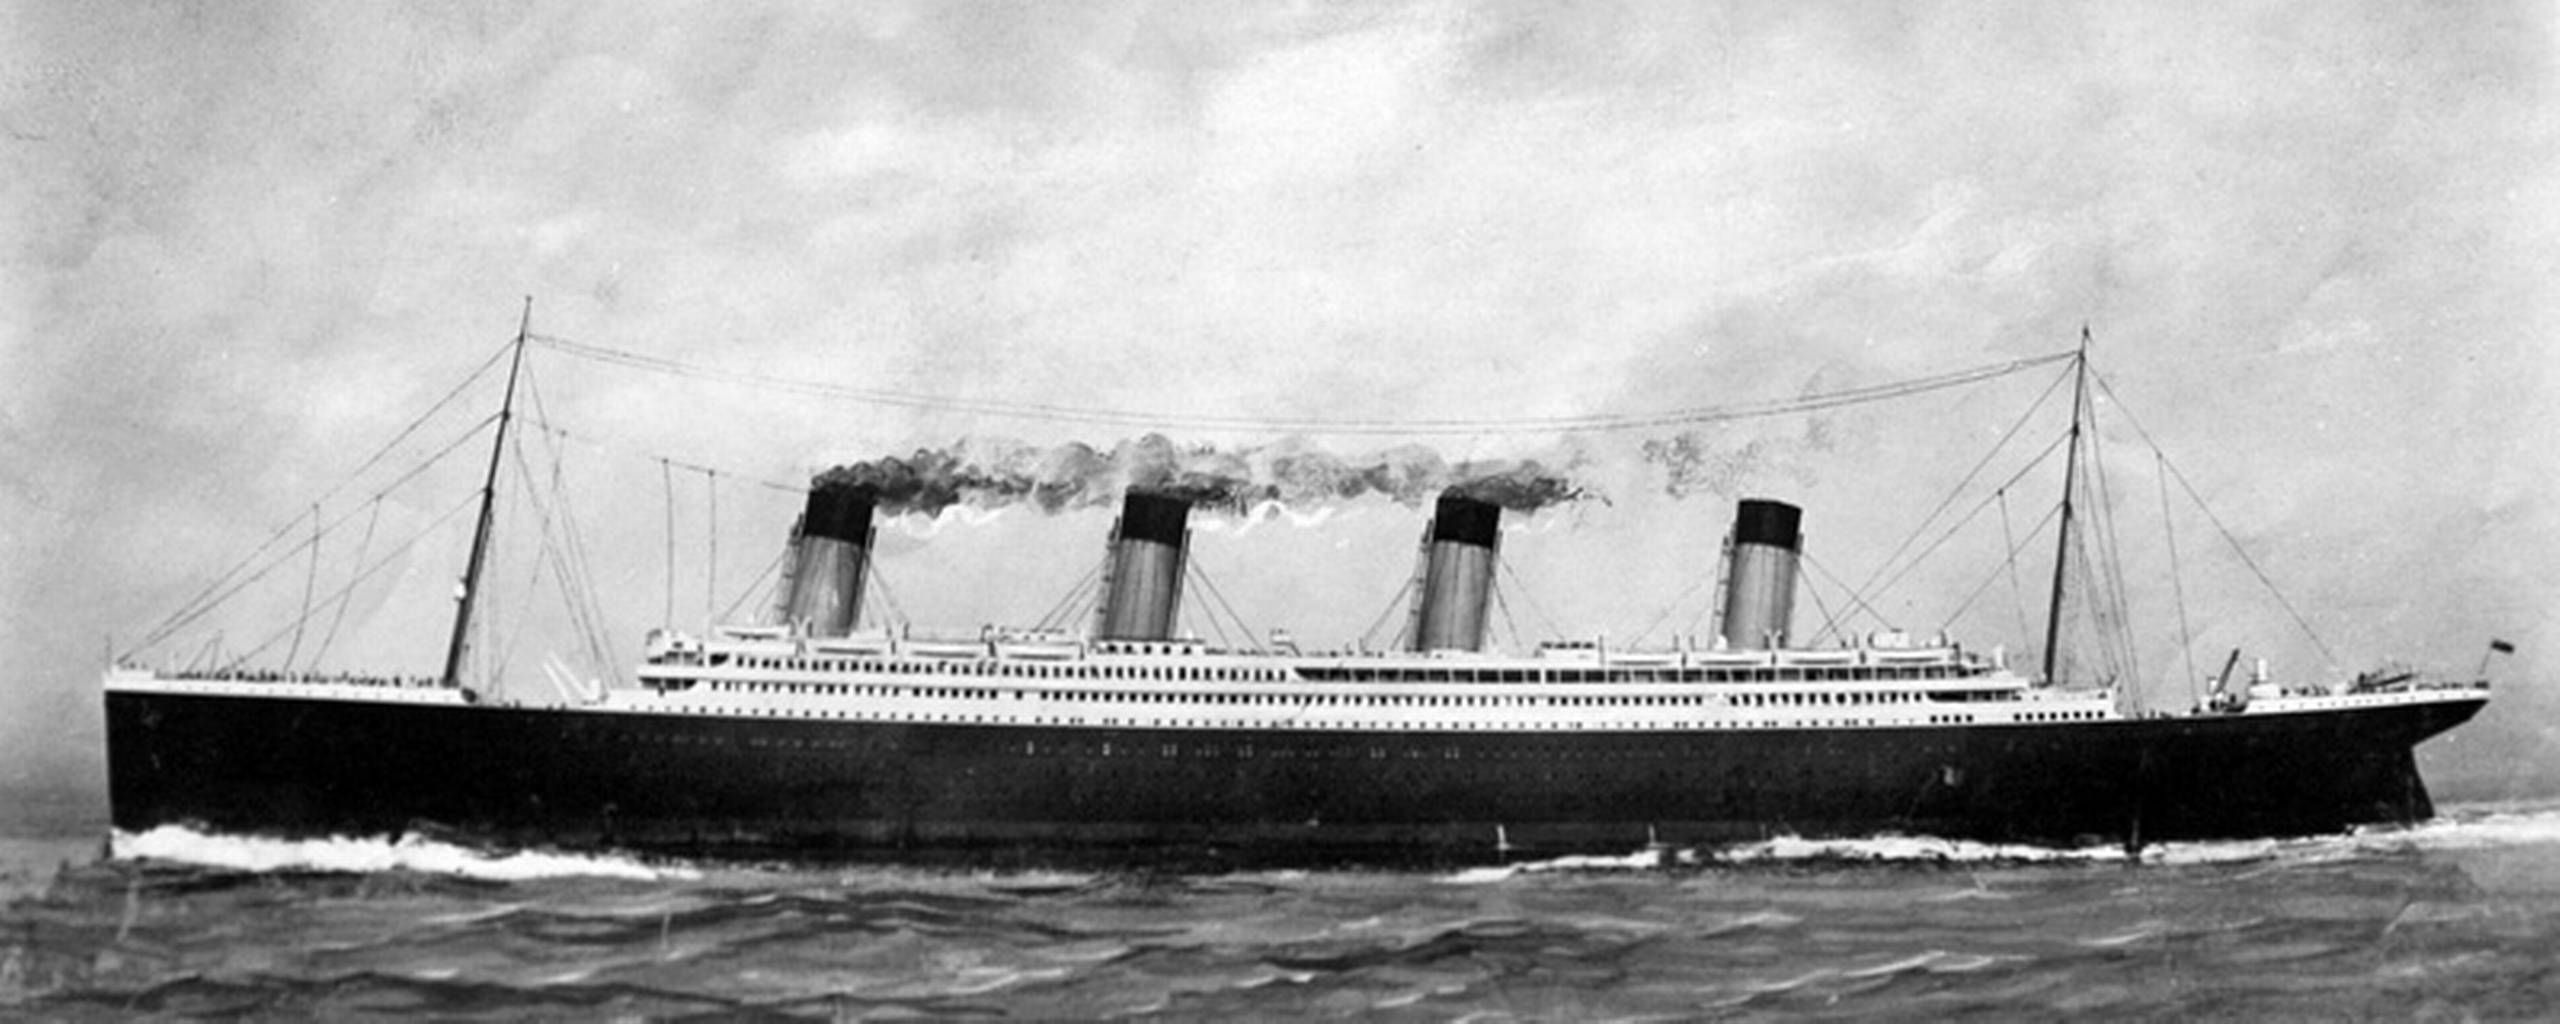 Titanic-forliset fylder